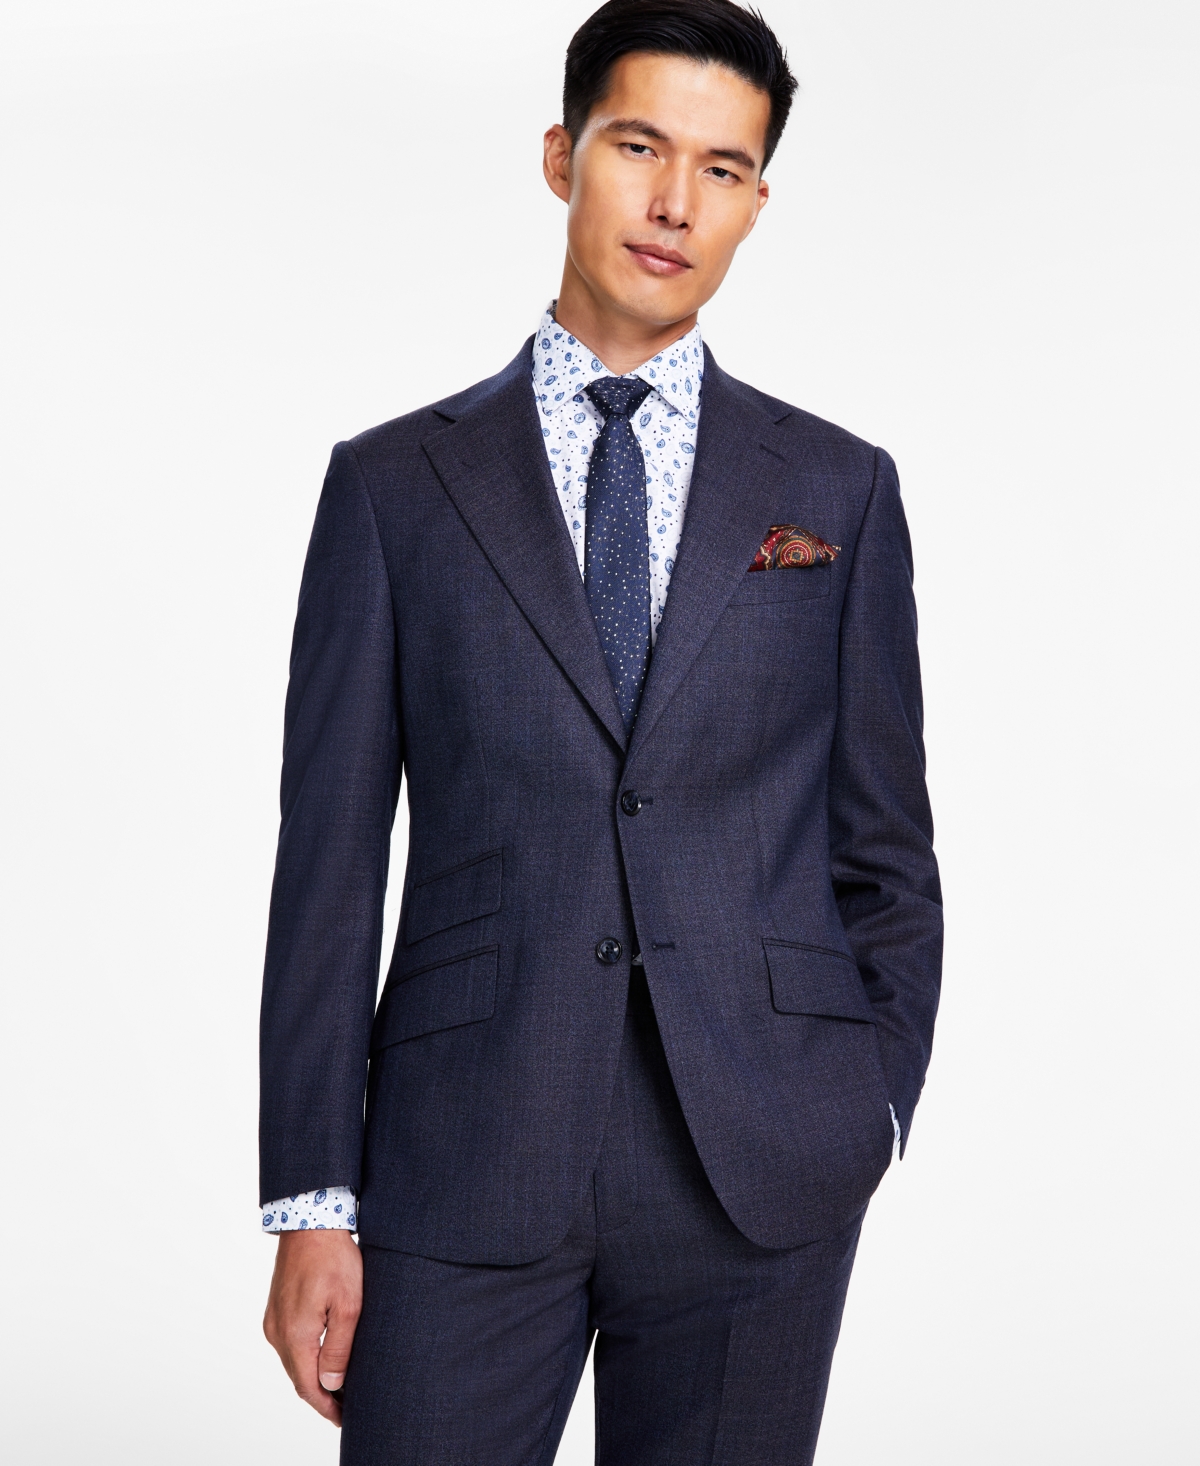 Men's Slim-Fit Stretch Solid Suit Jacket - Grey/brown Pinstripe